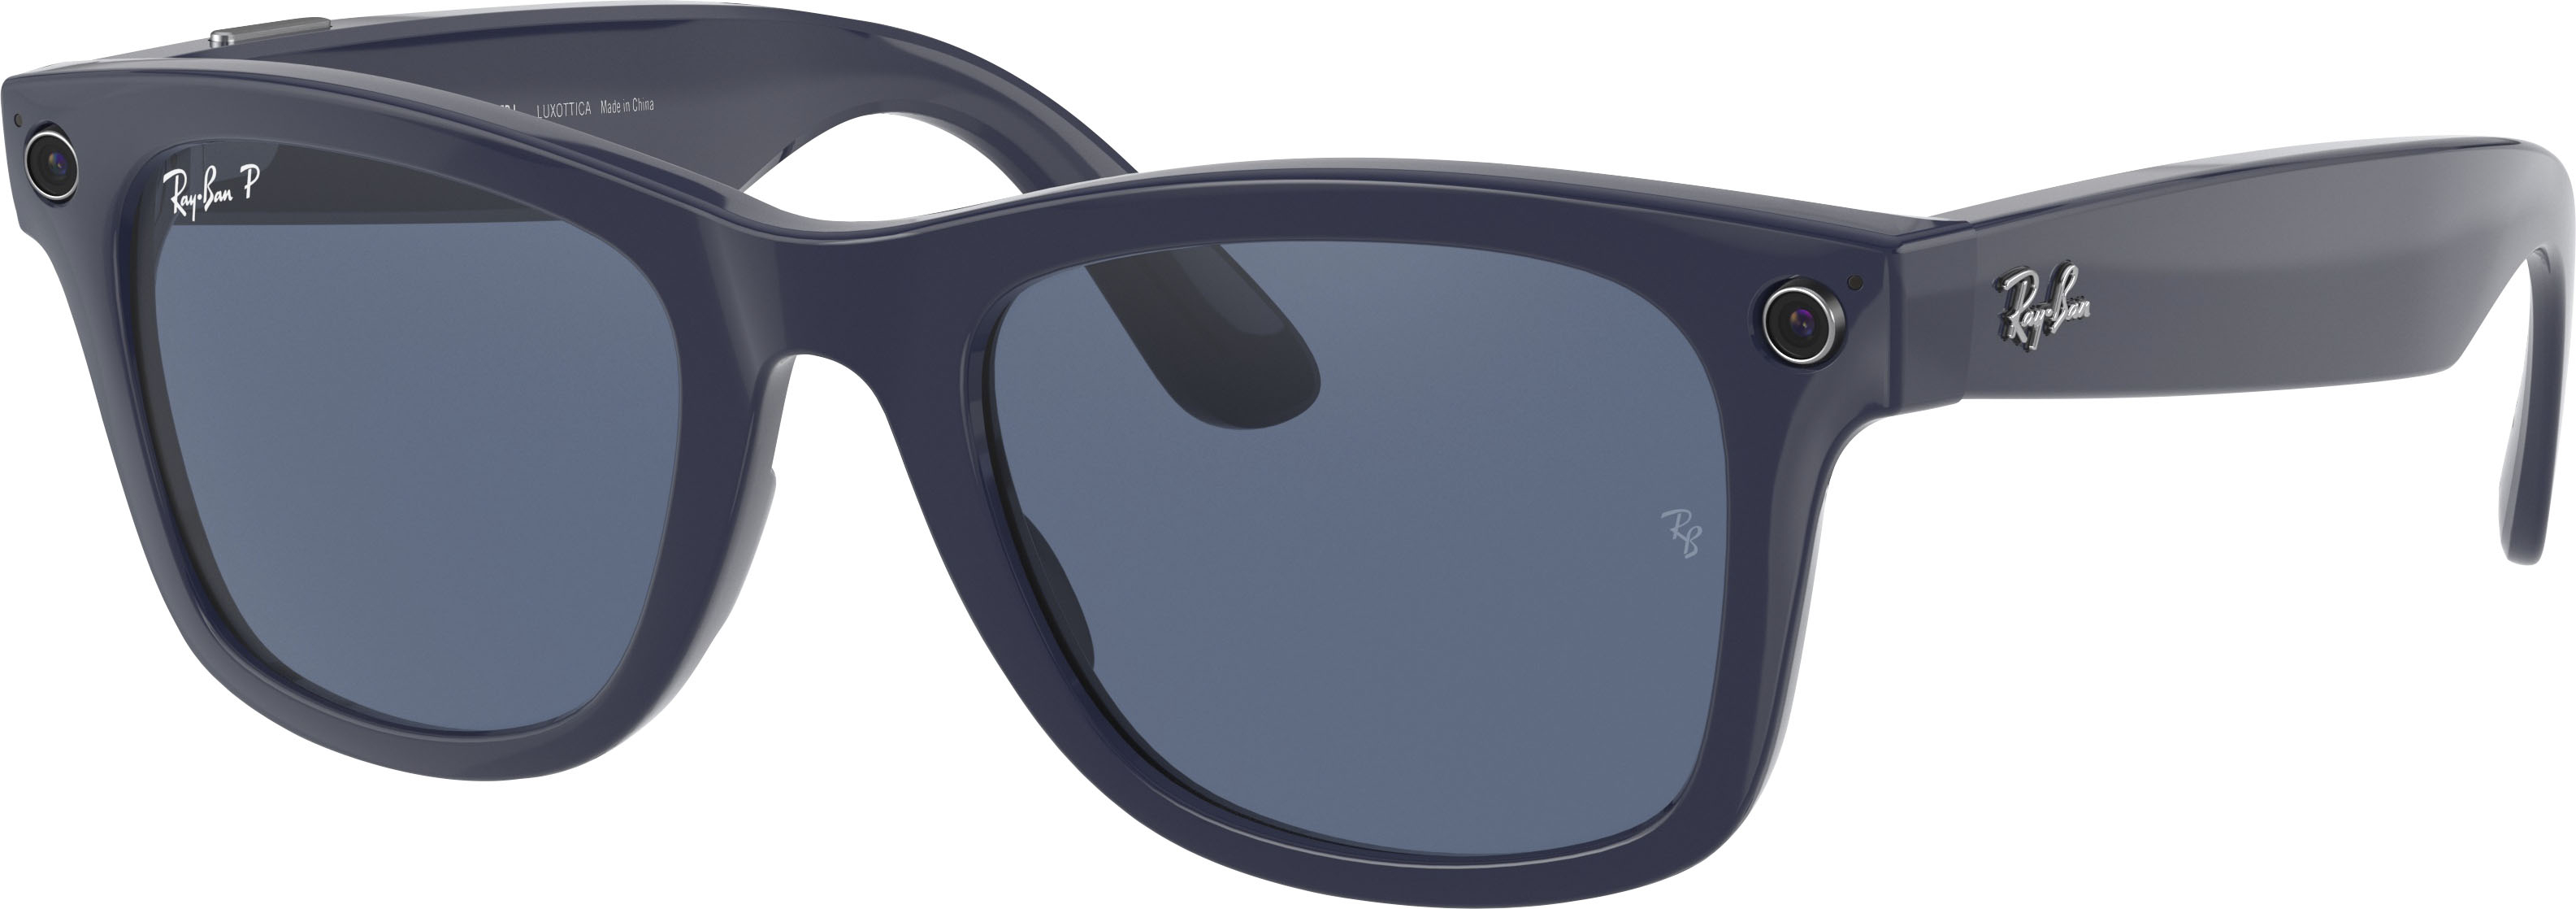 Ray-Ban - Stories Wayfarer Smart Glasses 53mm - Shiny Blue/Dark Blue Polarized